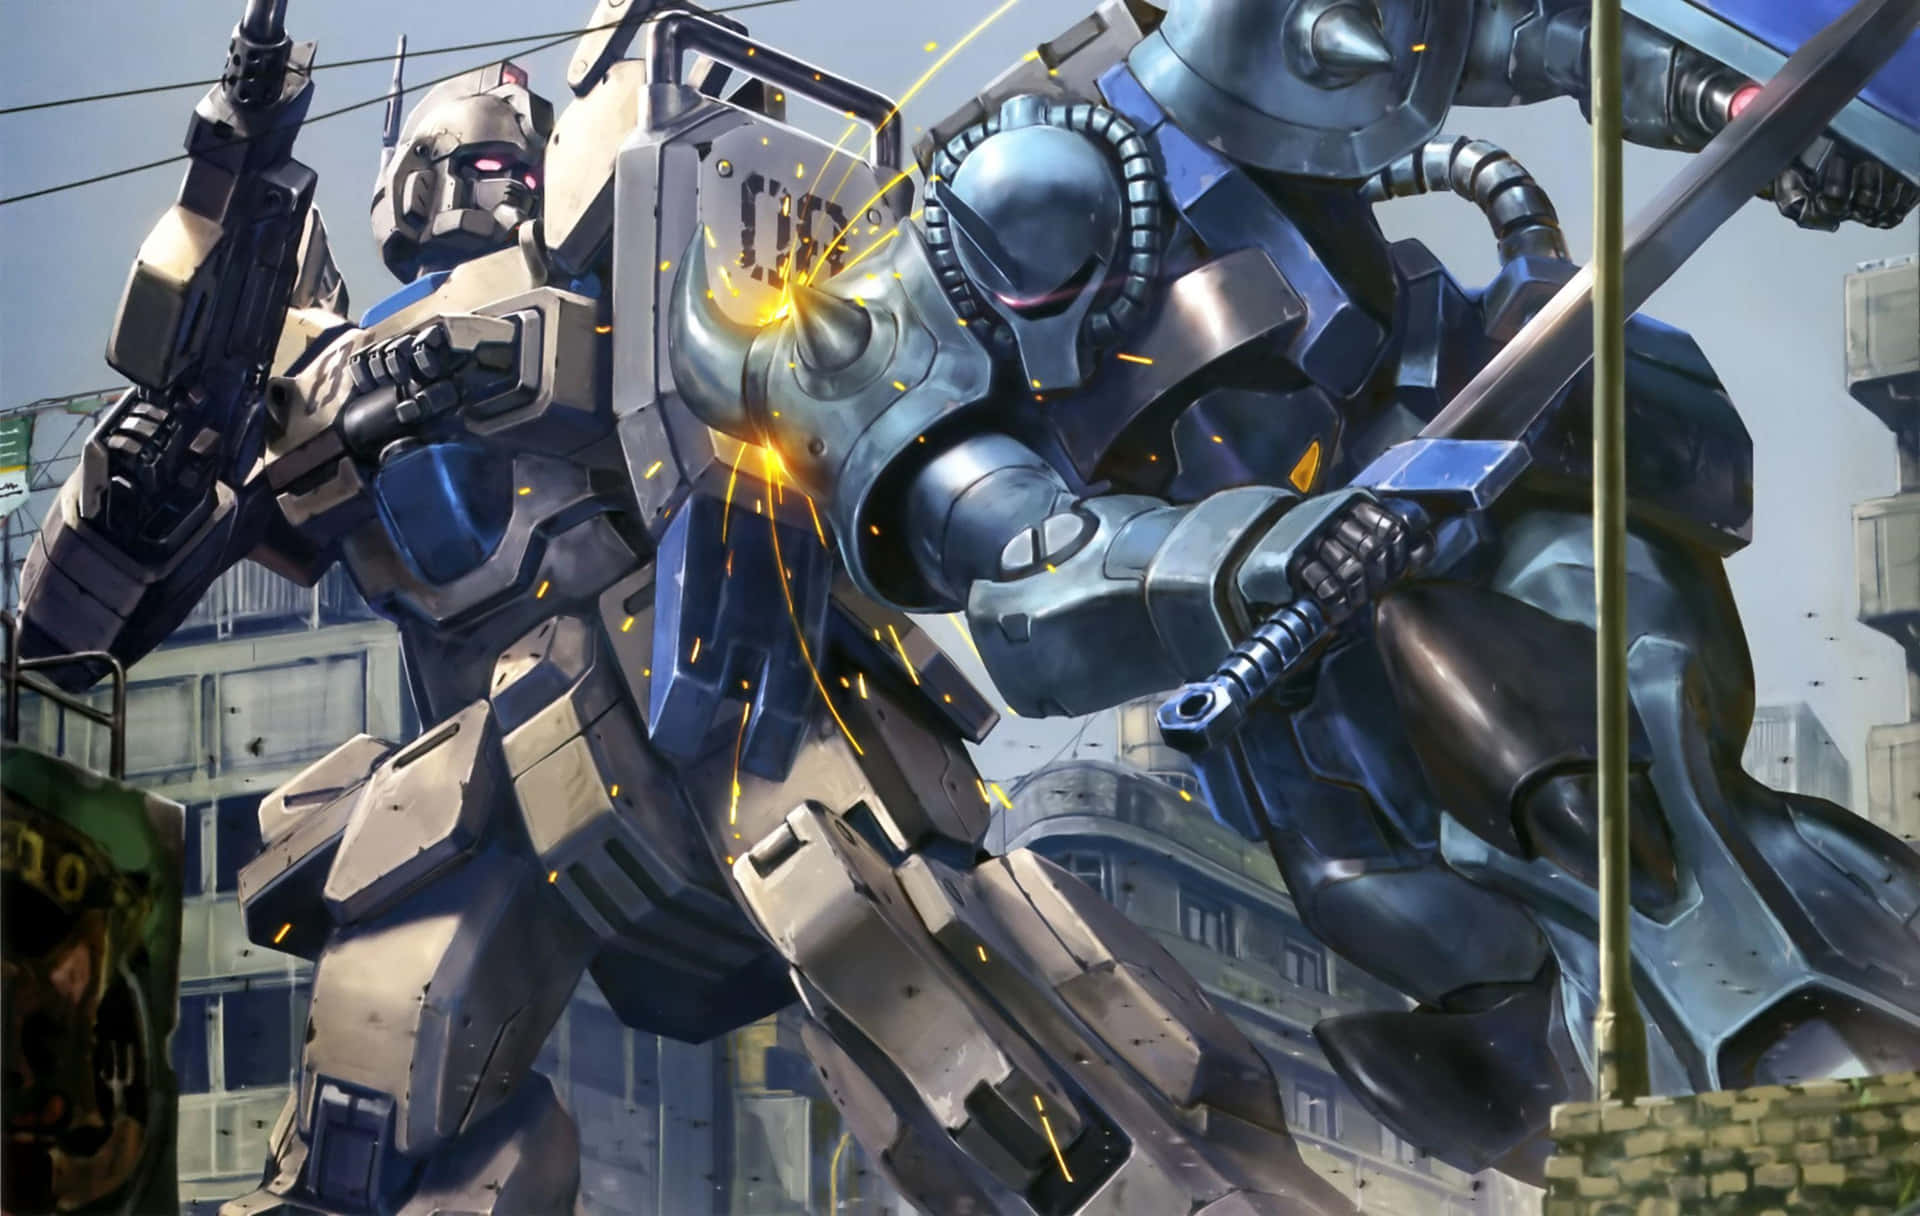 Explore the modern battlefield in 4K with the revolutionary Gundam 4K model. Wallpaper